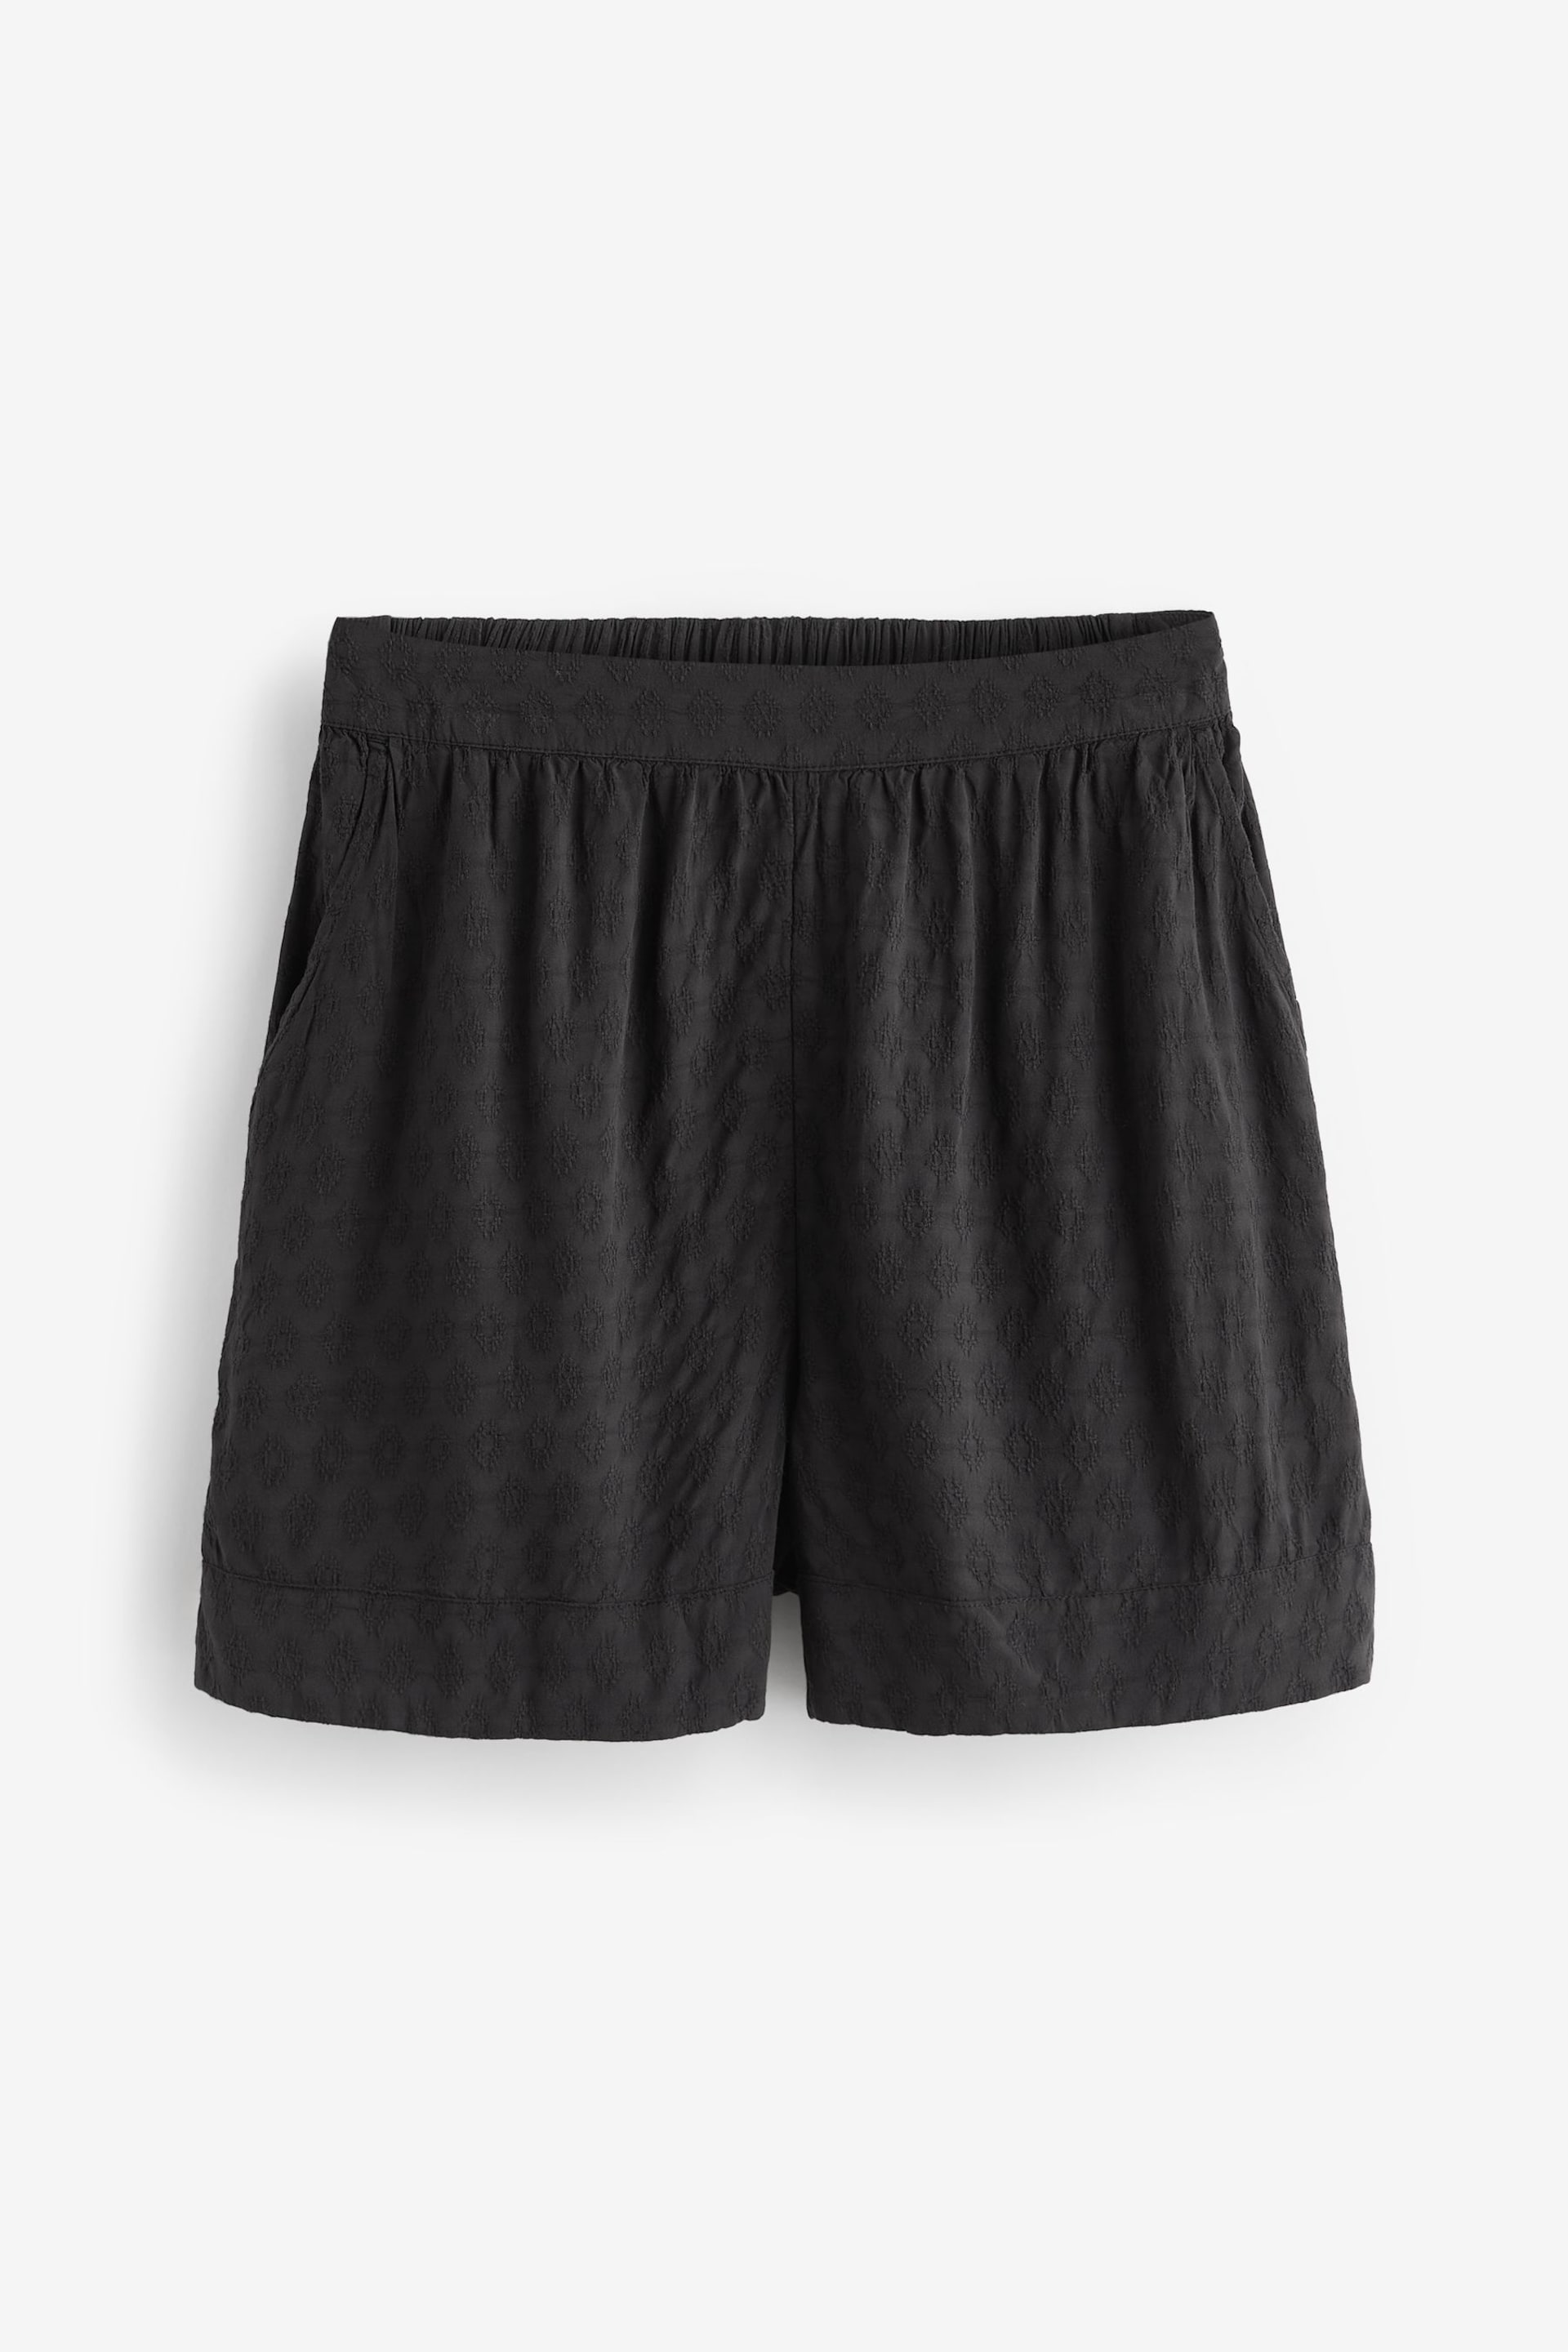 Black Pull-On Shorts - Image 6 of 6